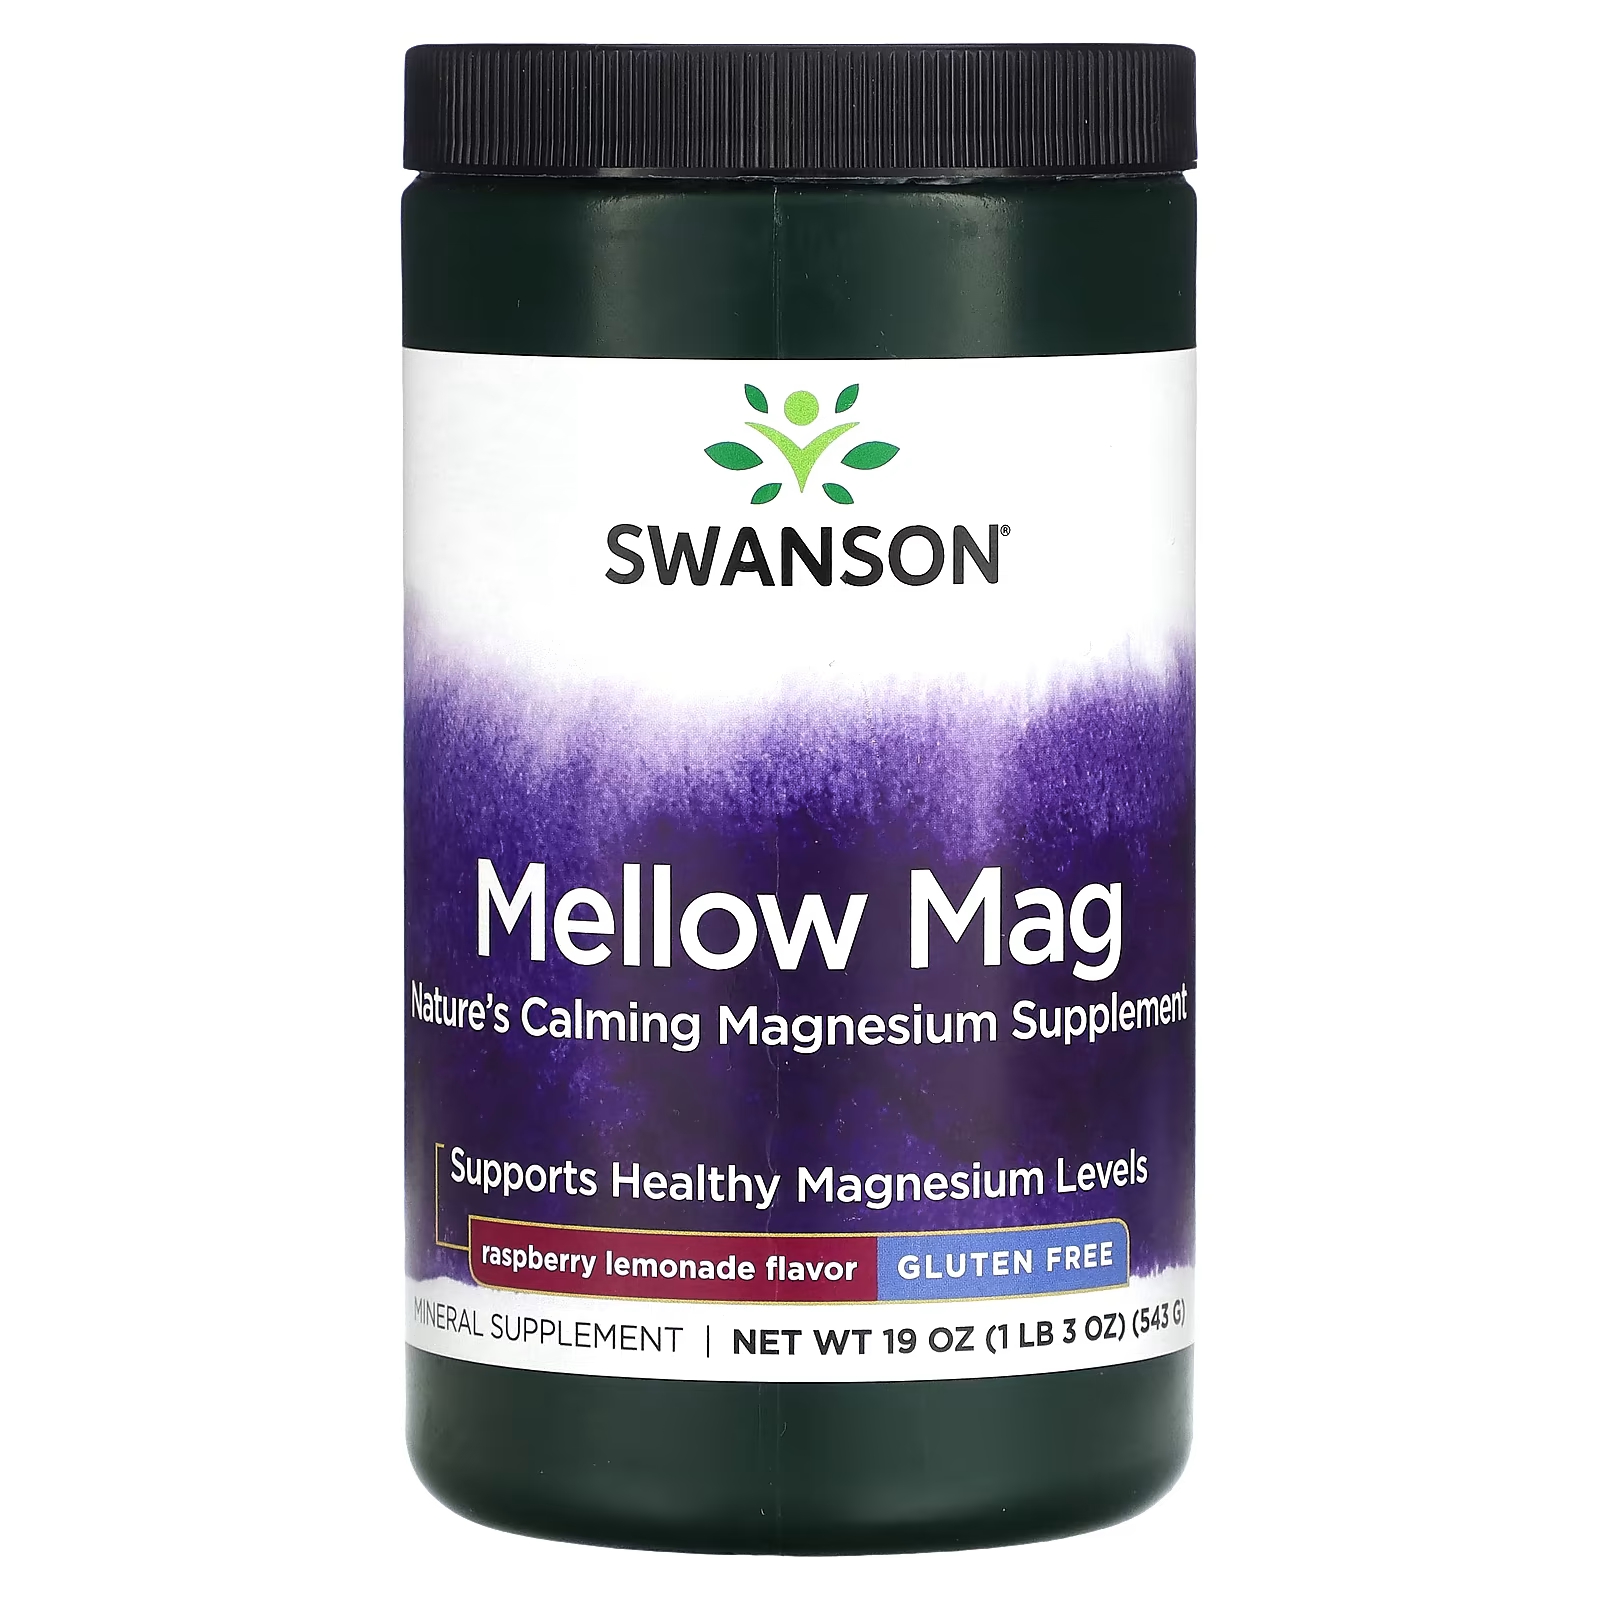 Пищевая добавка Swanson Mellow Mag со вкусом малинового лимонада, 554 г пищевая добавка swanson mellow mag со вкусом апельсина 554 г